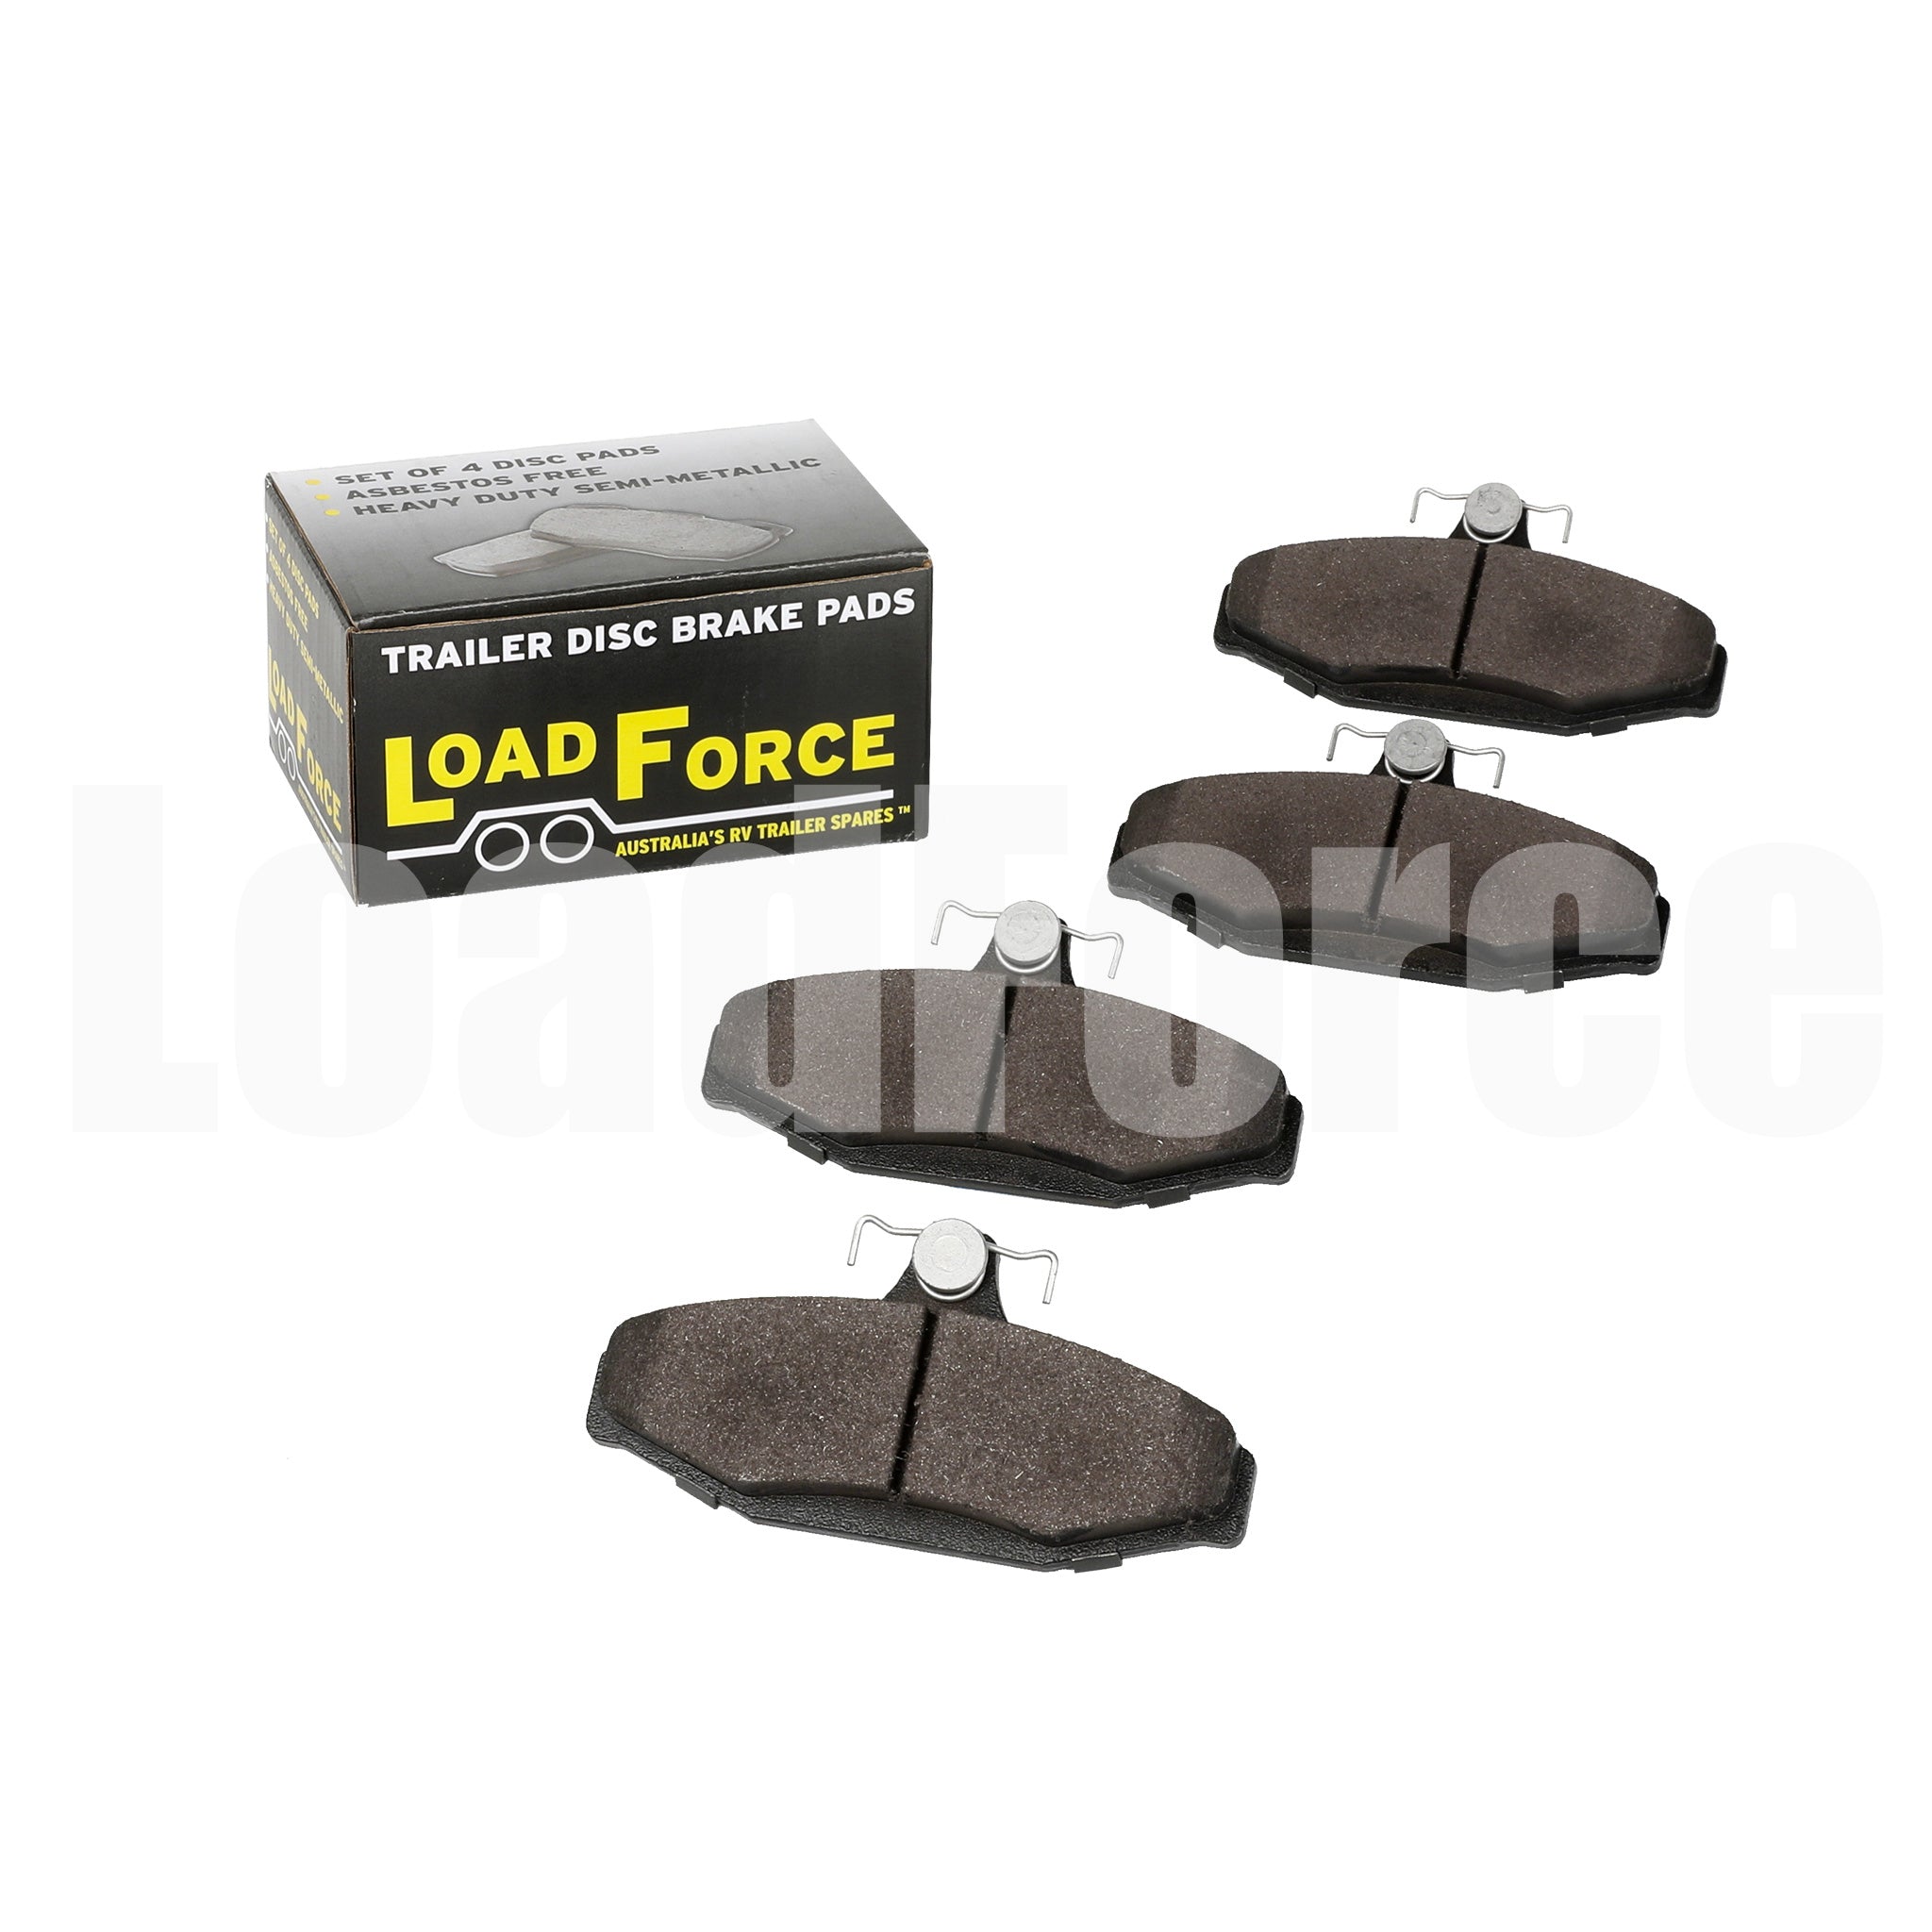 LoadForce disc brake pad set for PBR type 1 calipers.